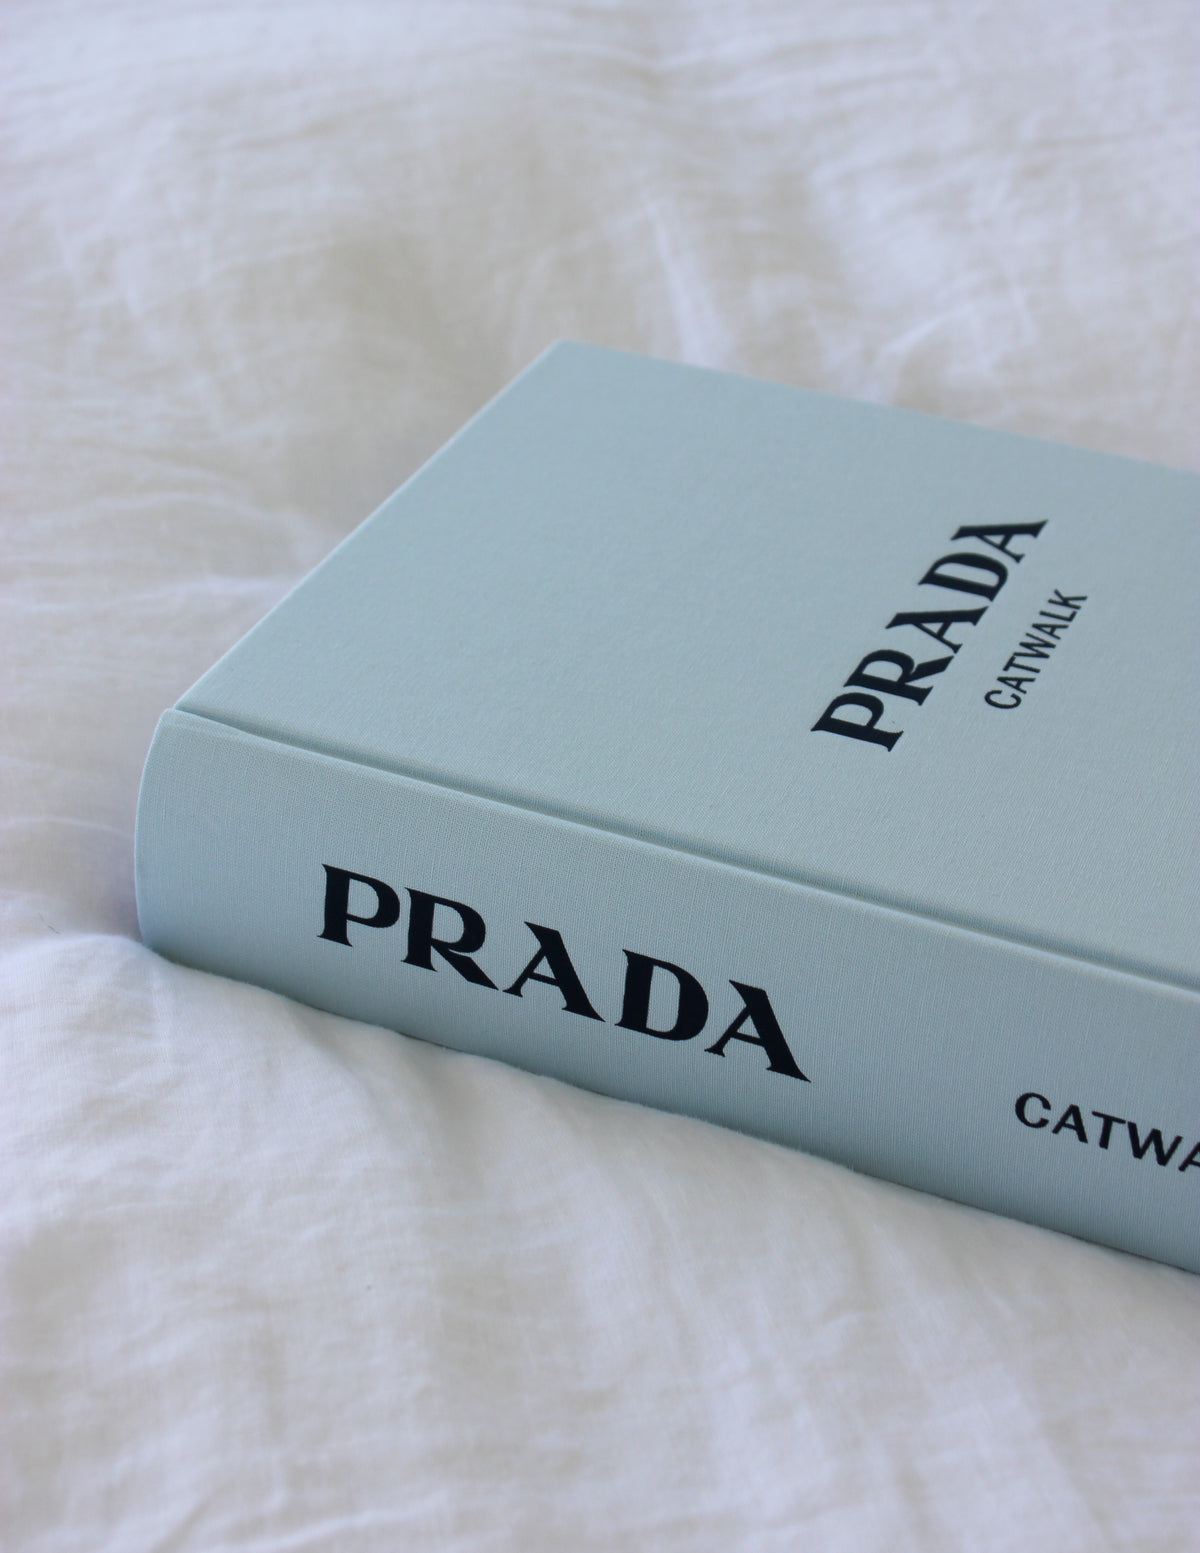 Prada - (Catwalk) (Hardcover)